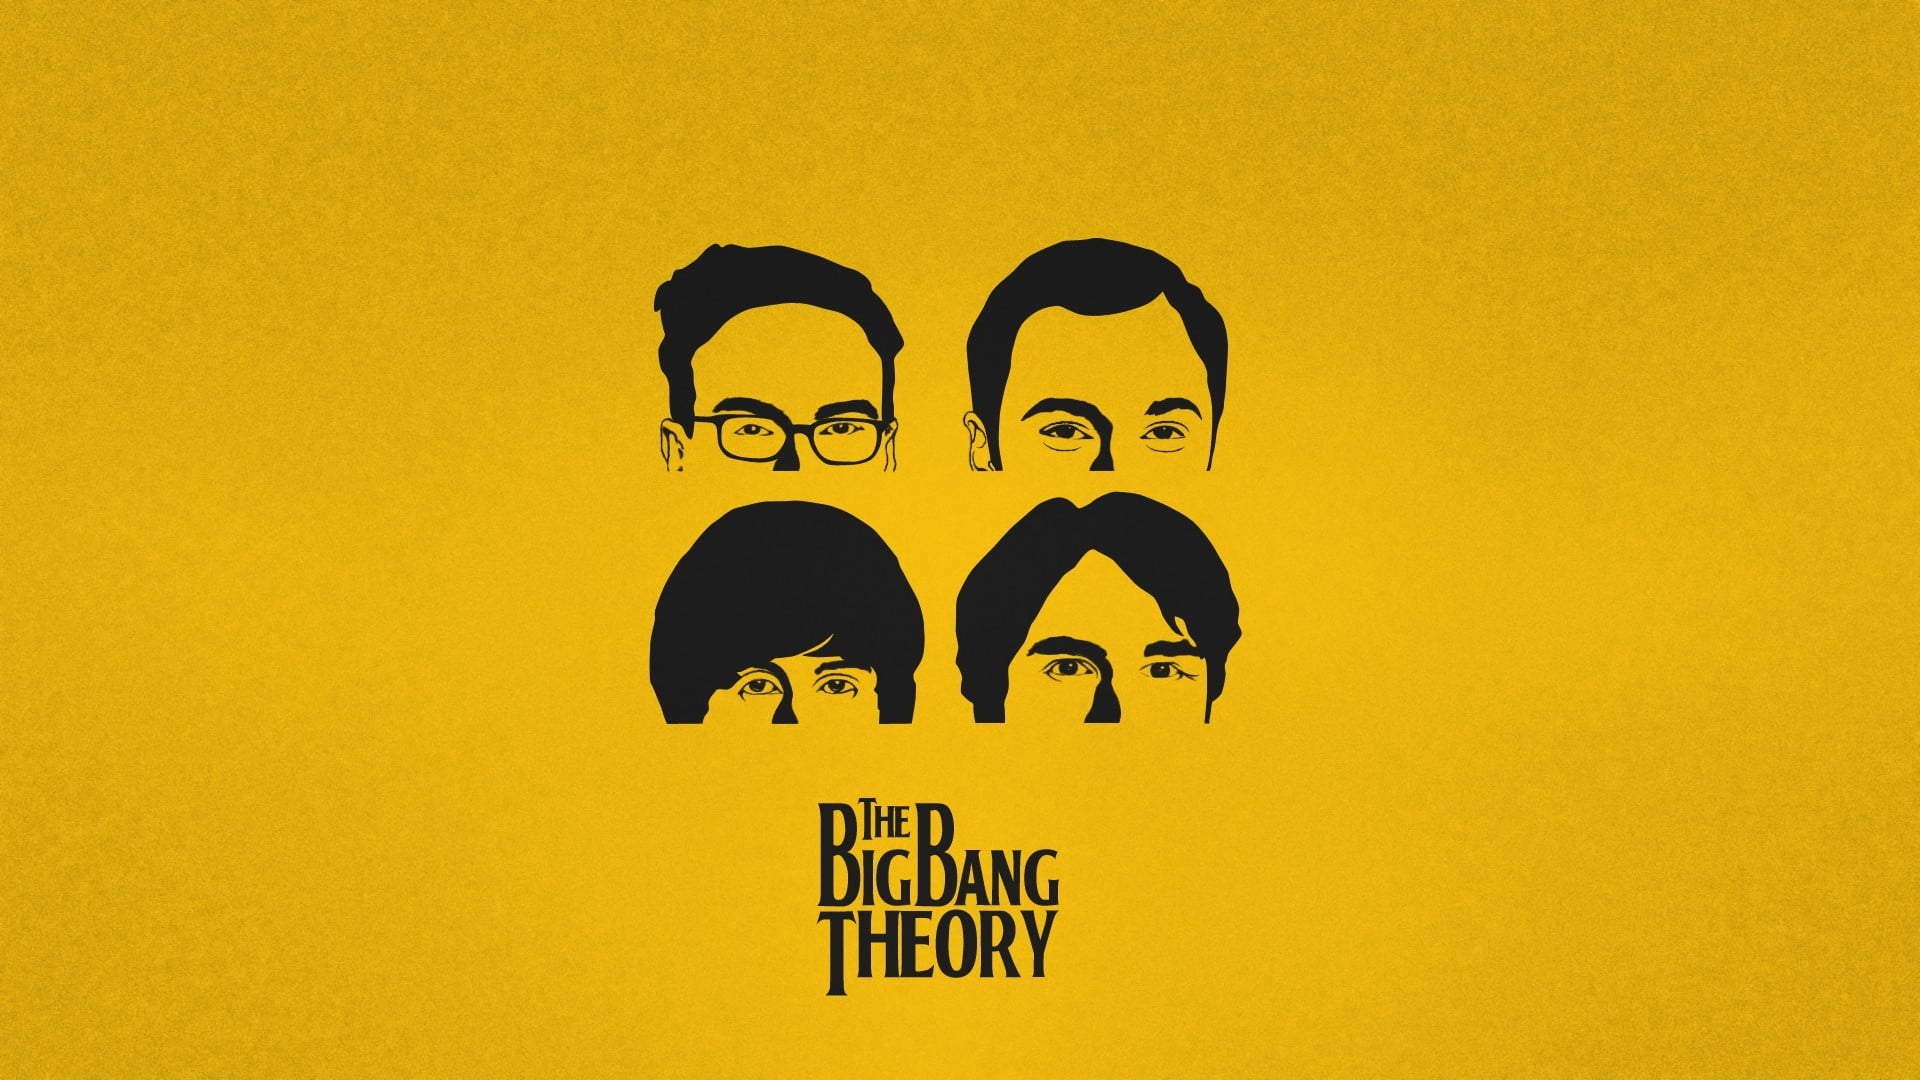 The Big Bang Theory wallpaper, fan art, communication, text, yellow